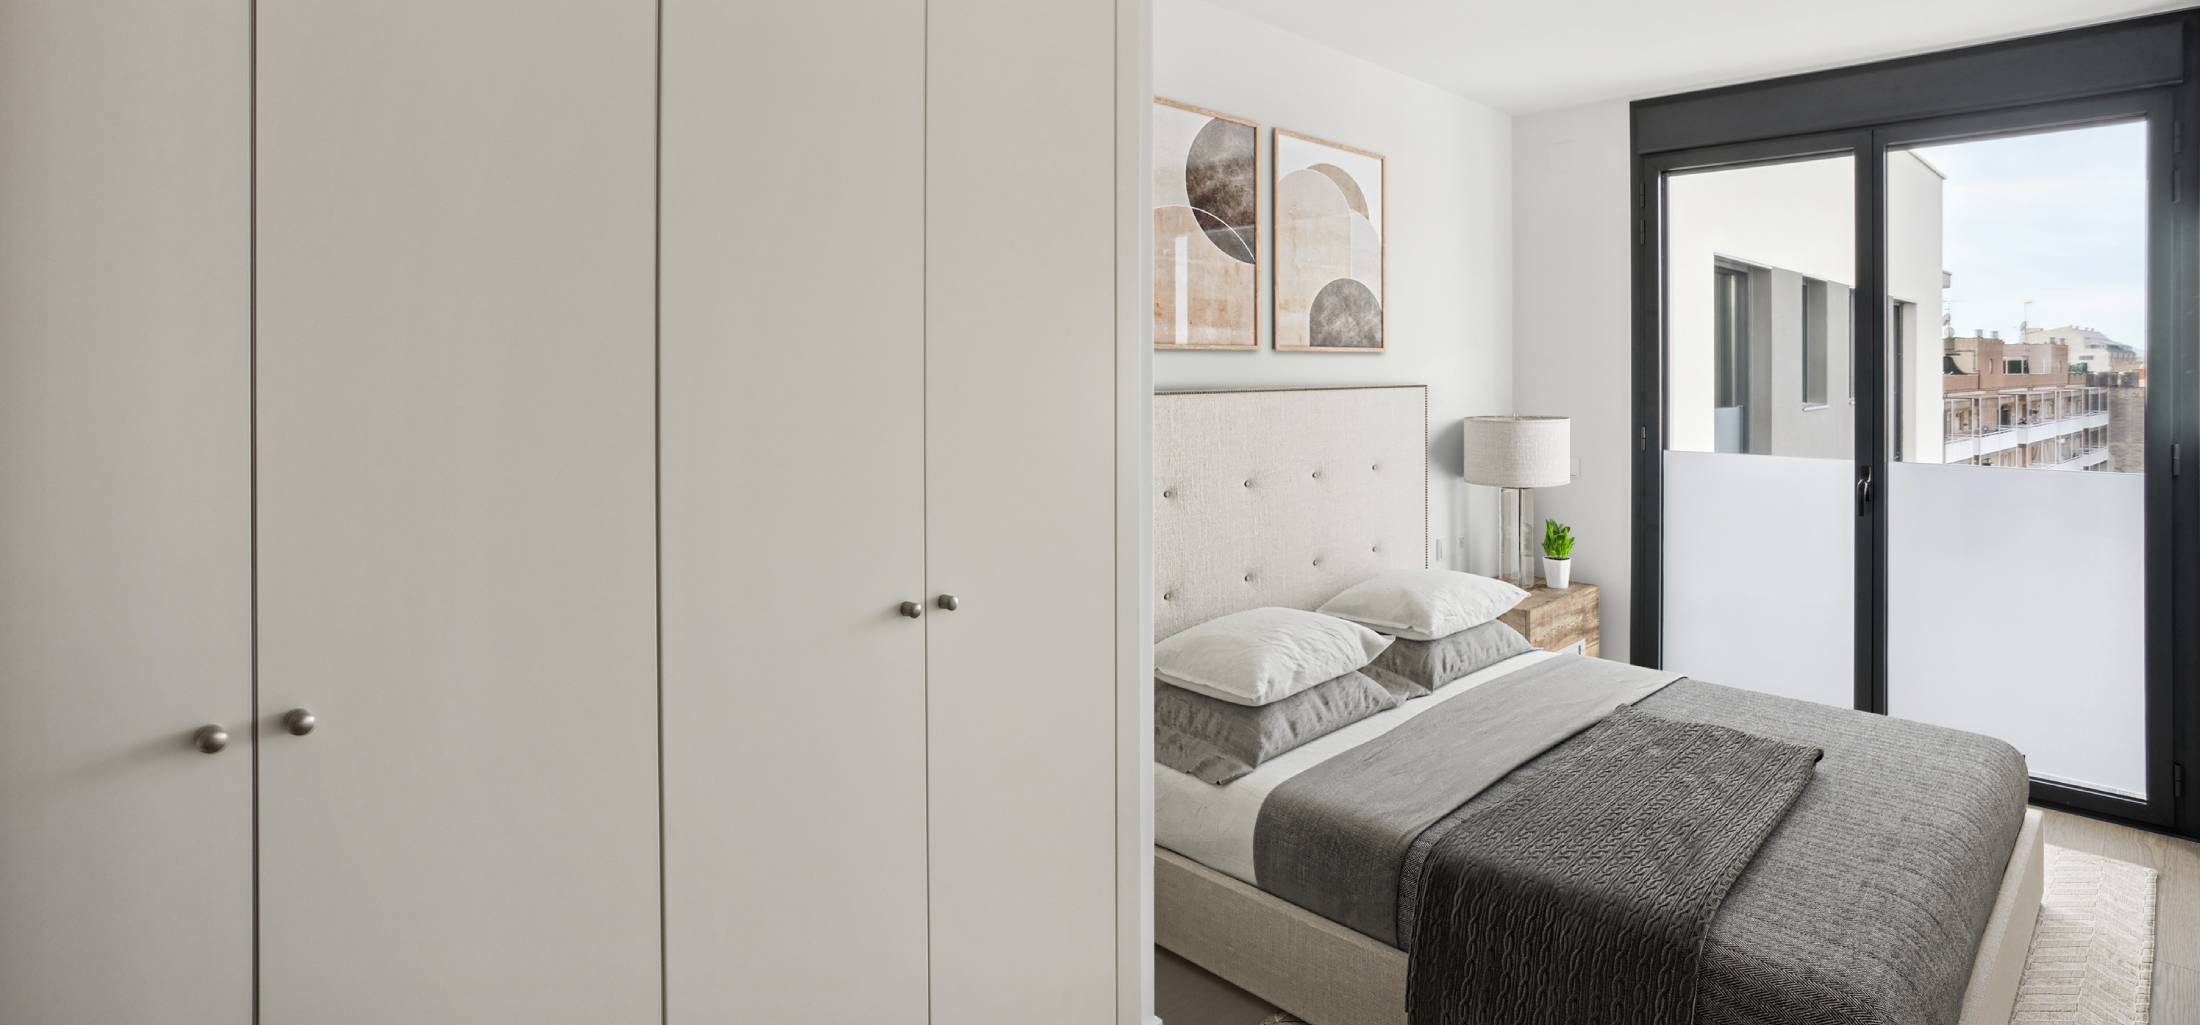 Dormitori individual | Marobert | Badalona 